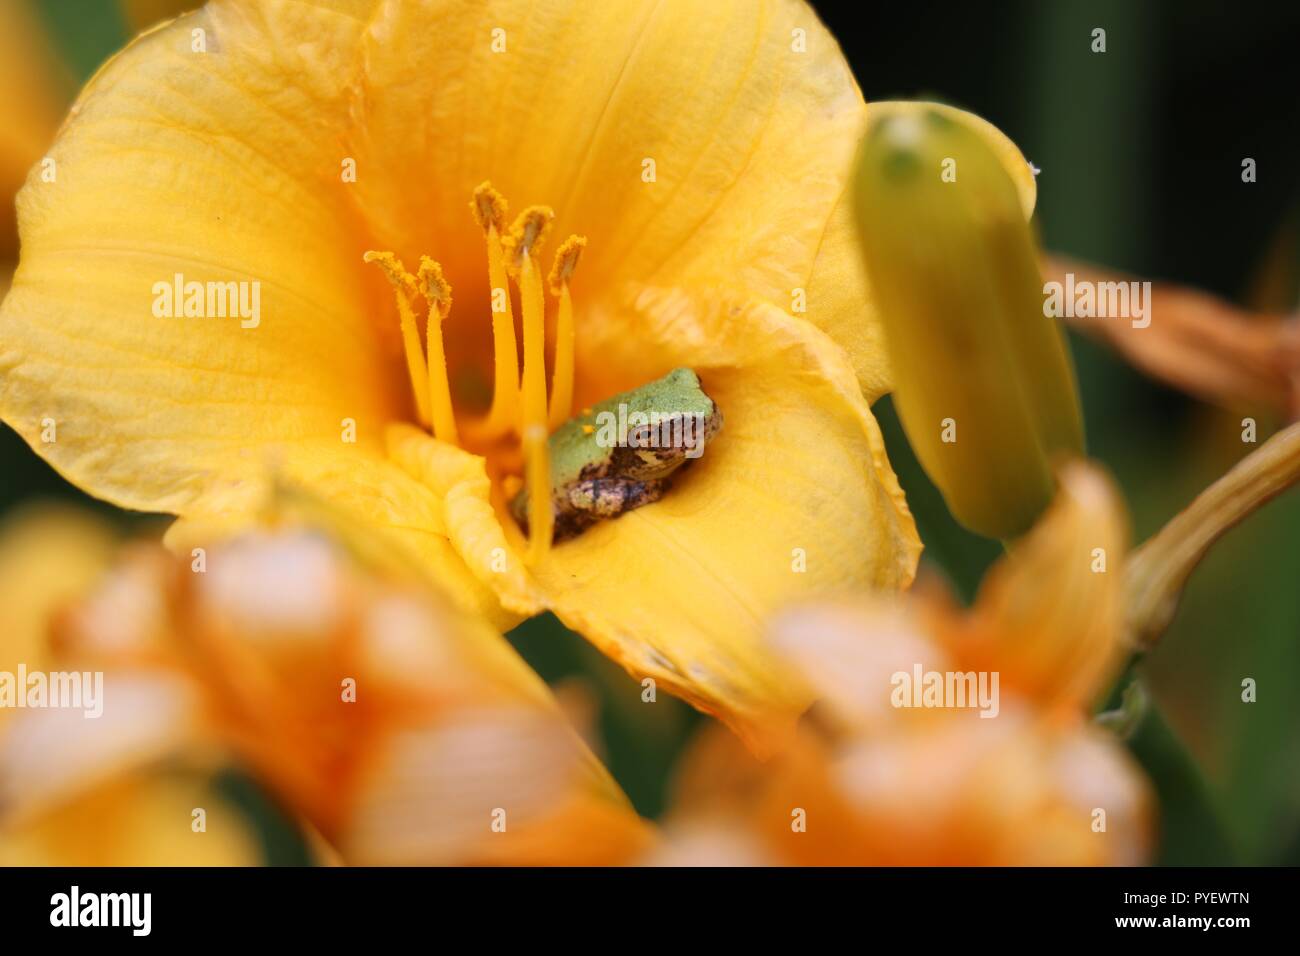 tree frog on yellow flower Stock Photo